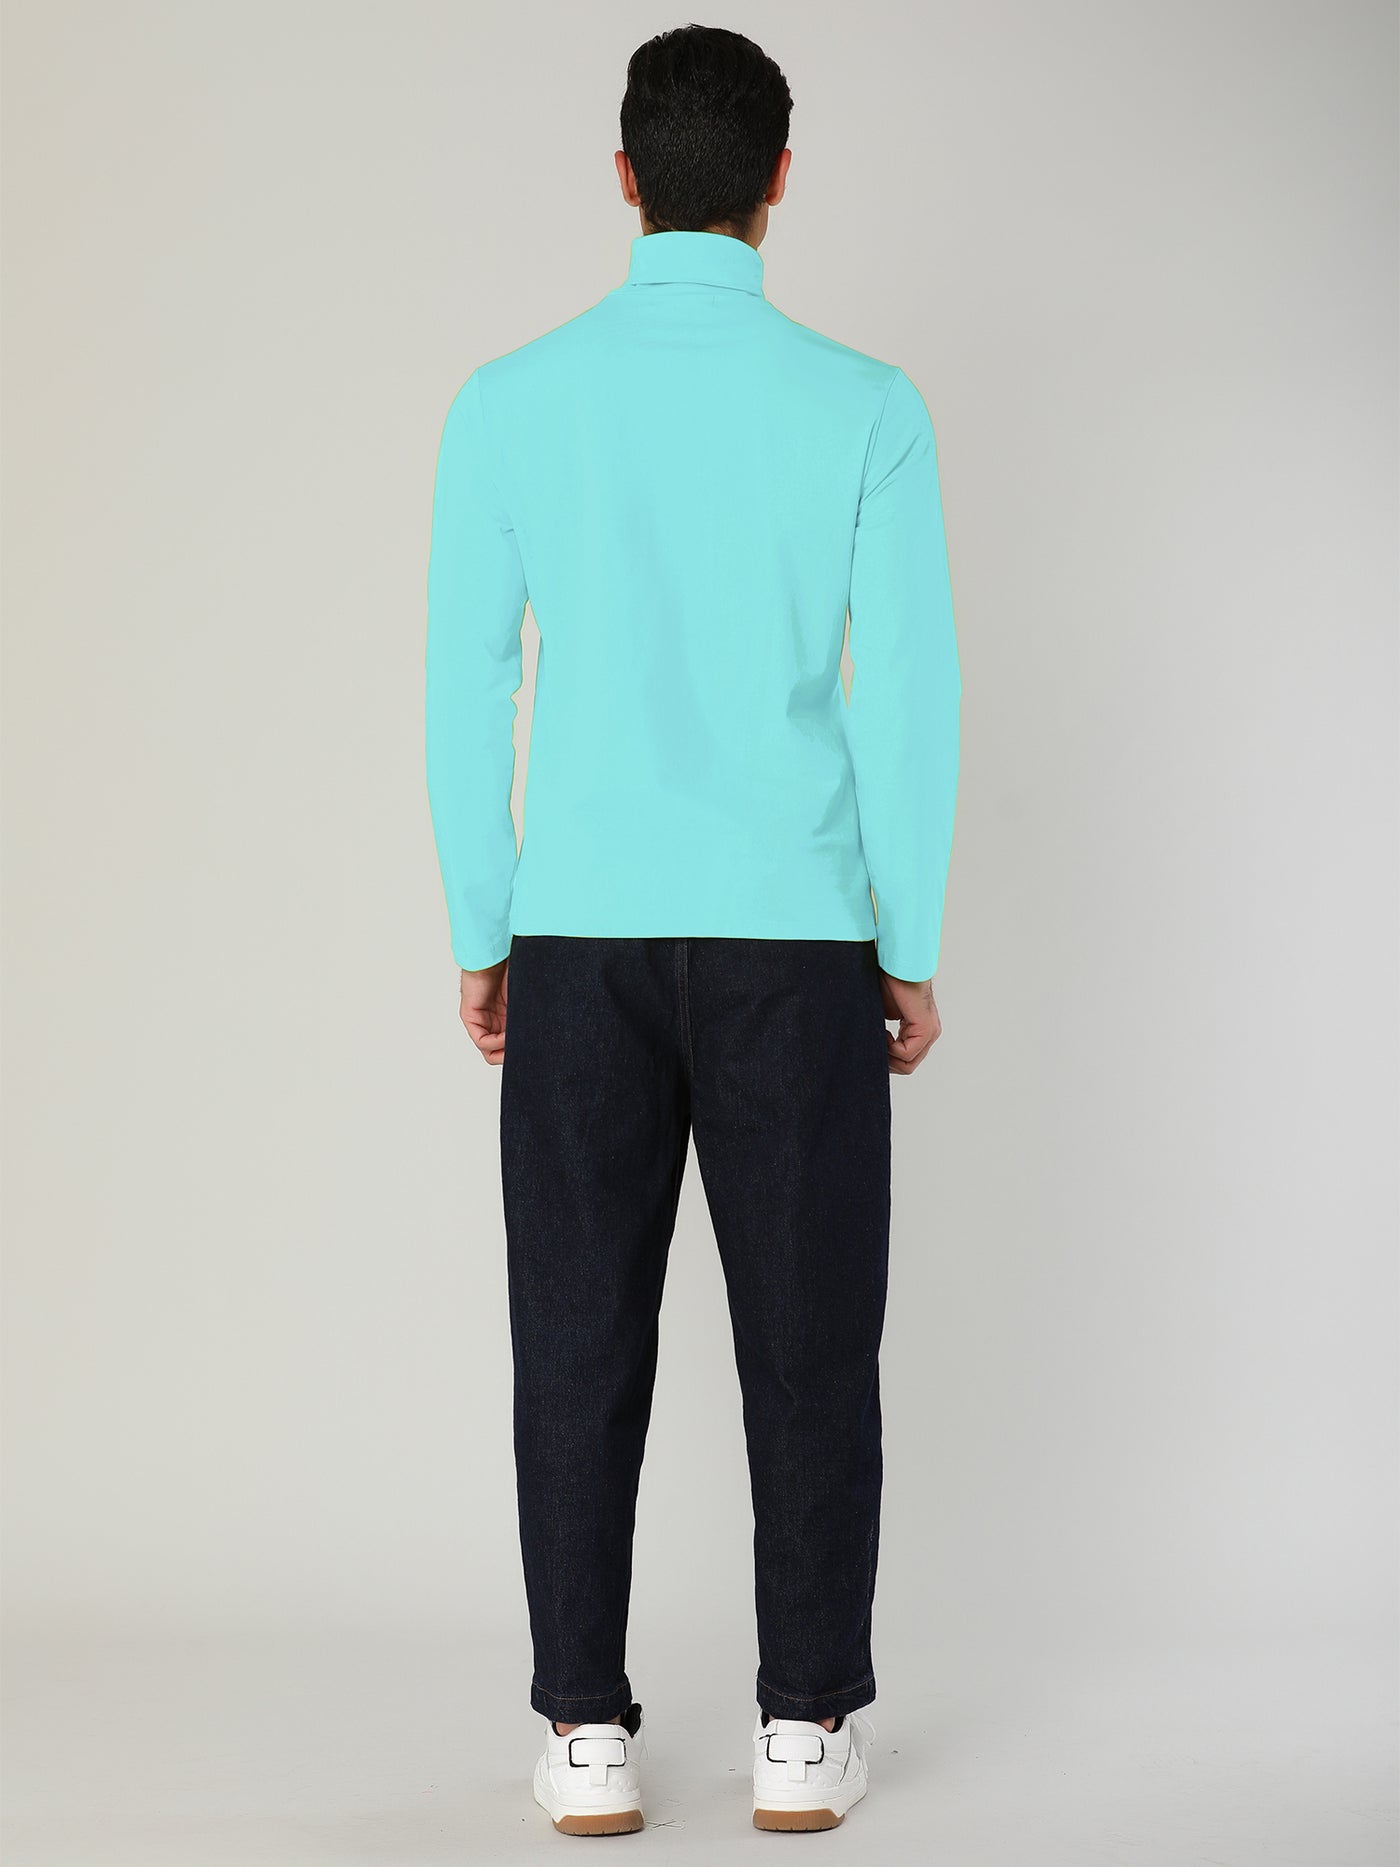 Bublédon Solid Color Turtleneck Pullover Long Sleeve Shirt